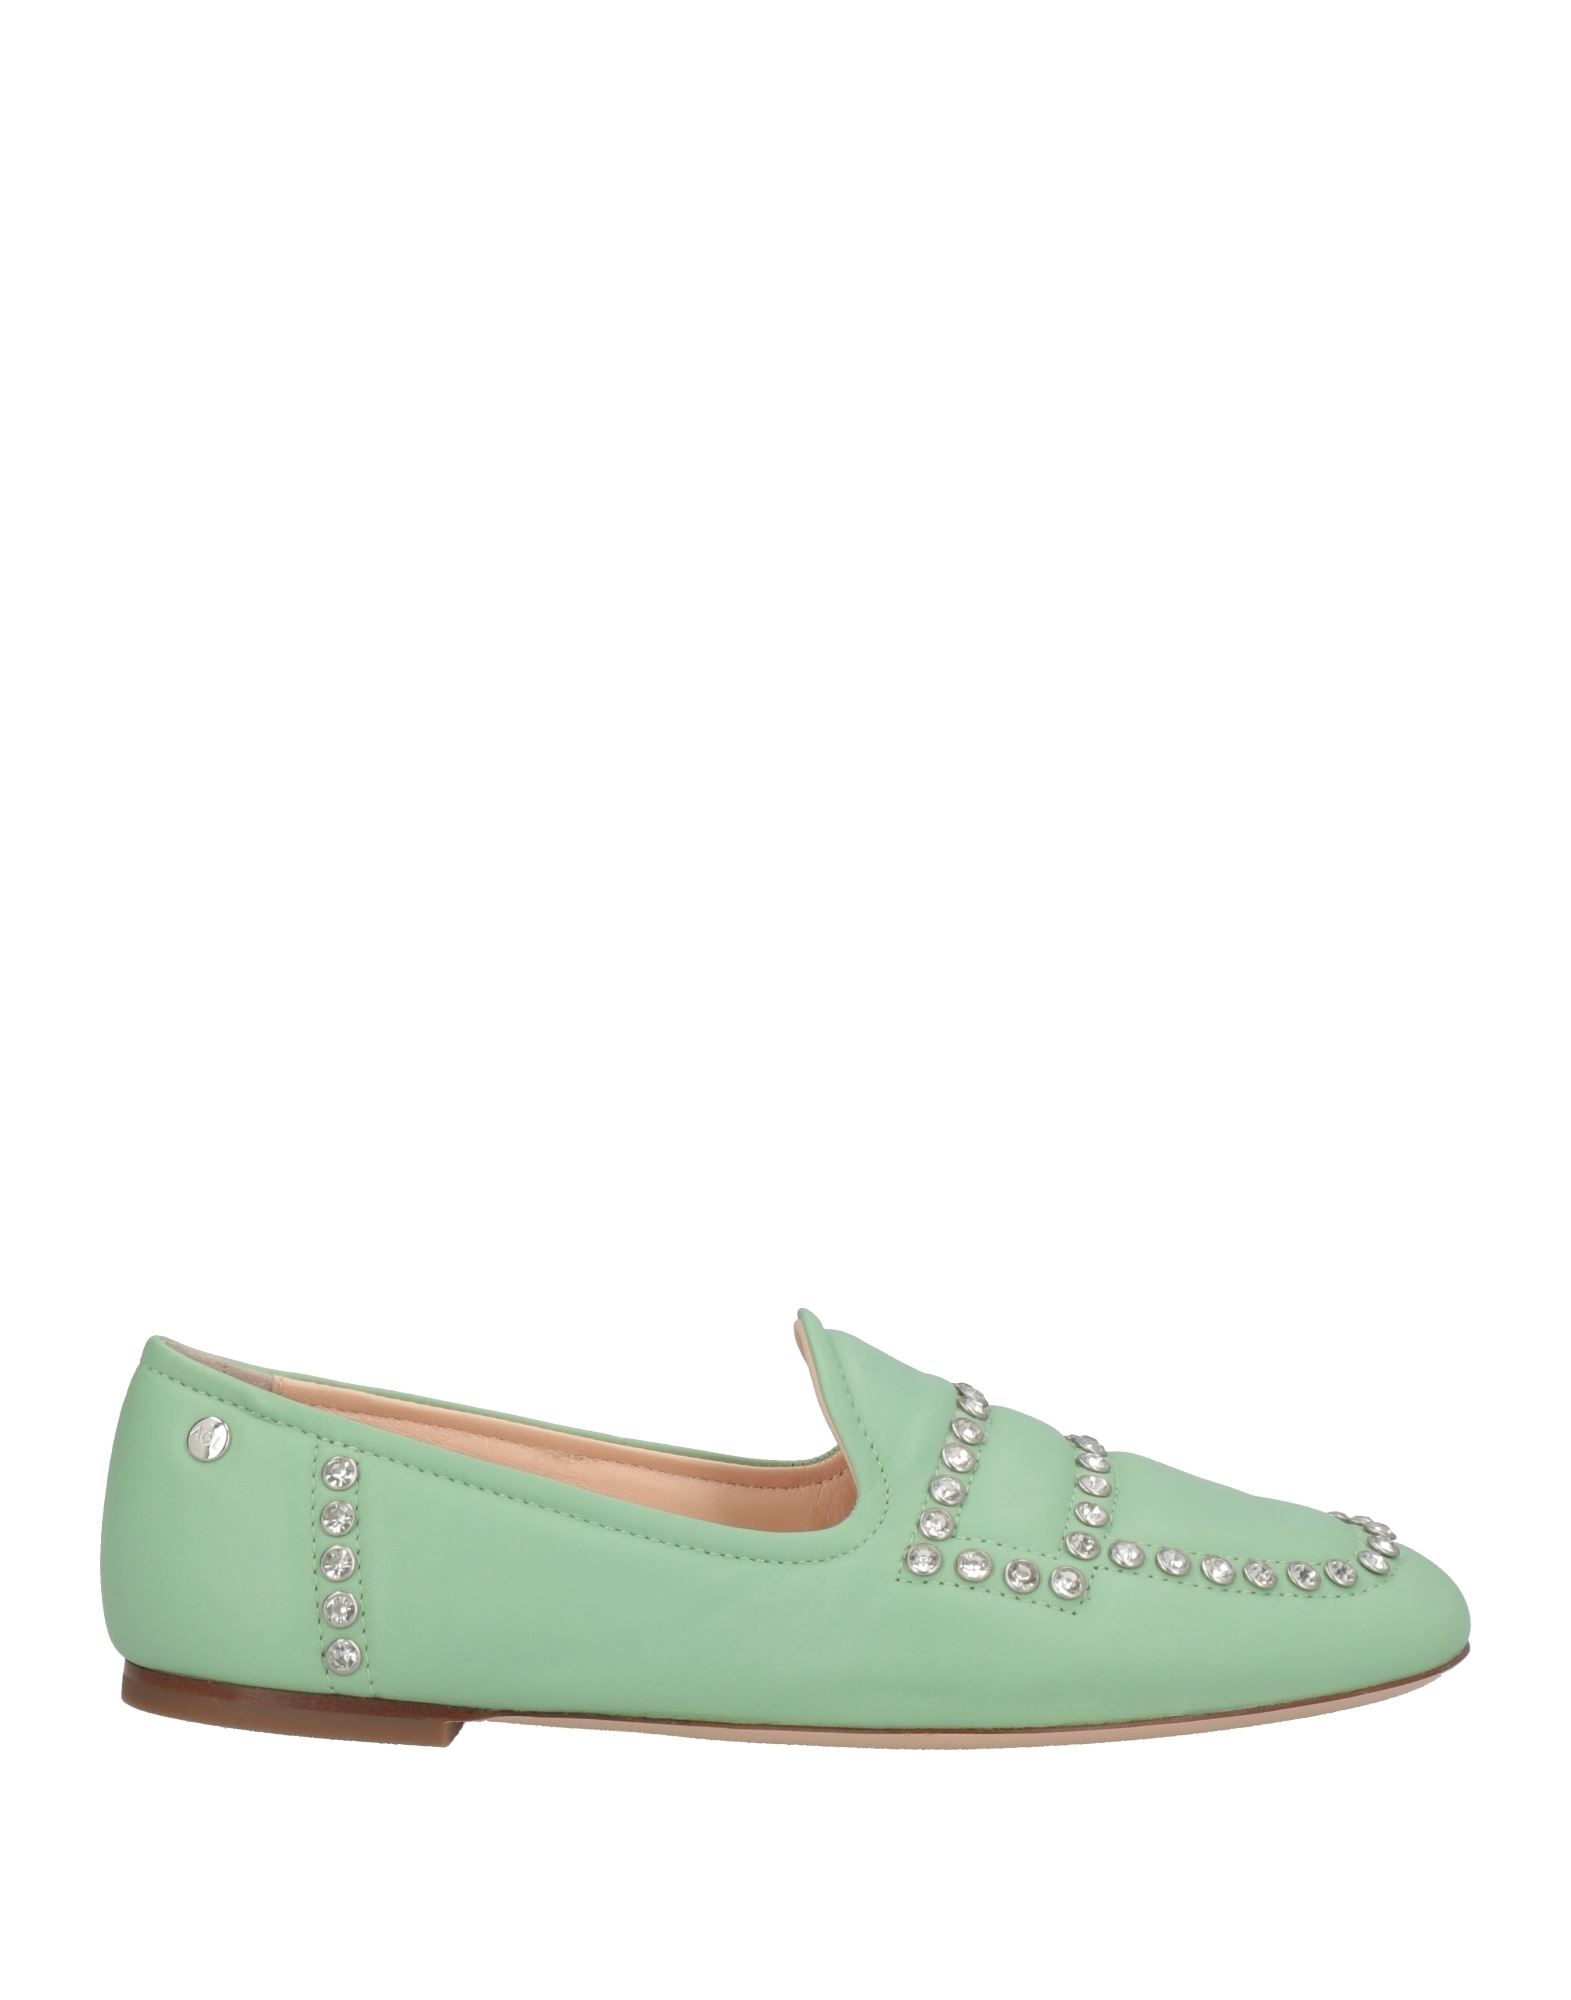 Shop Agl Attilio Giusti Leombruni Agl Woman Loafers Light Green Size 7.5 Soft Leather